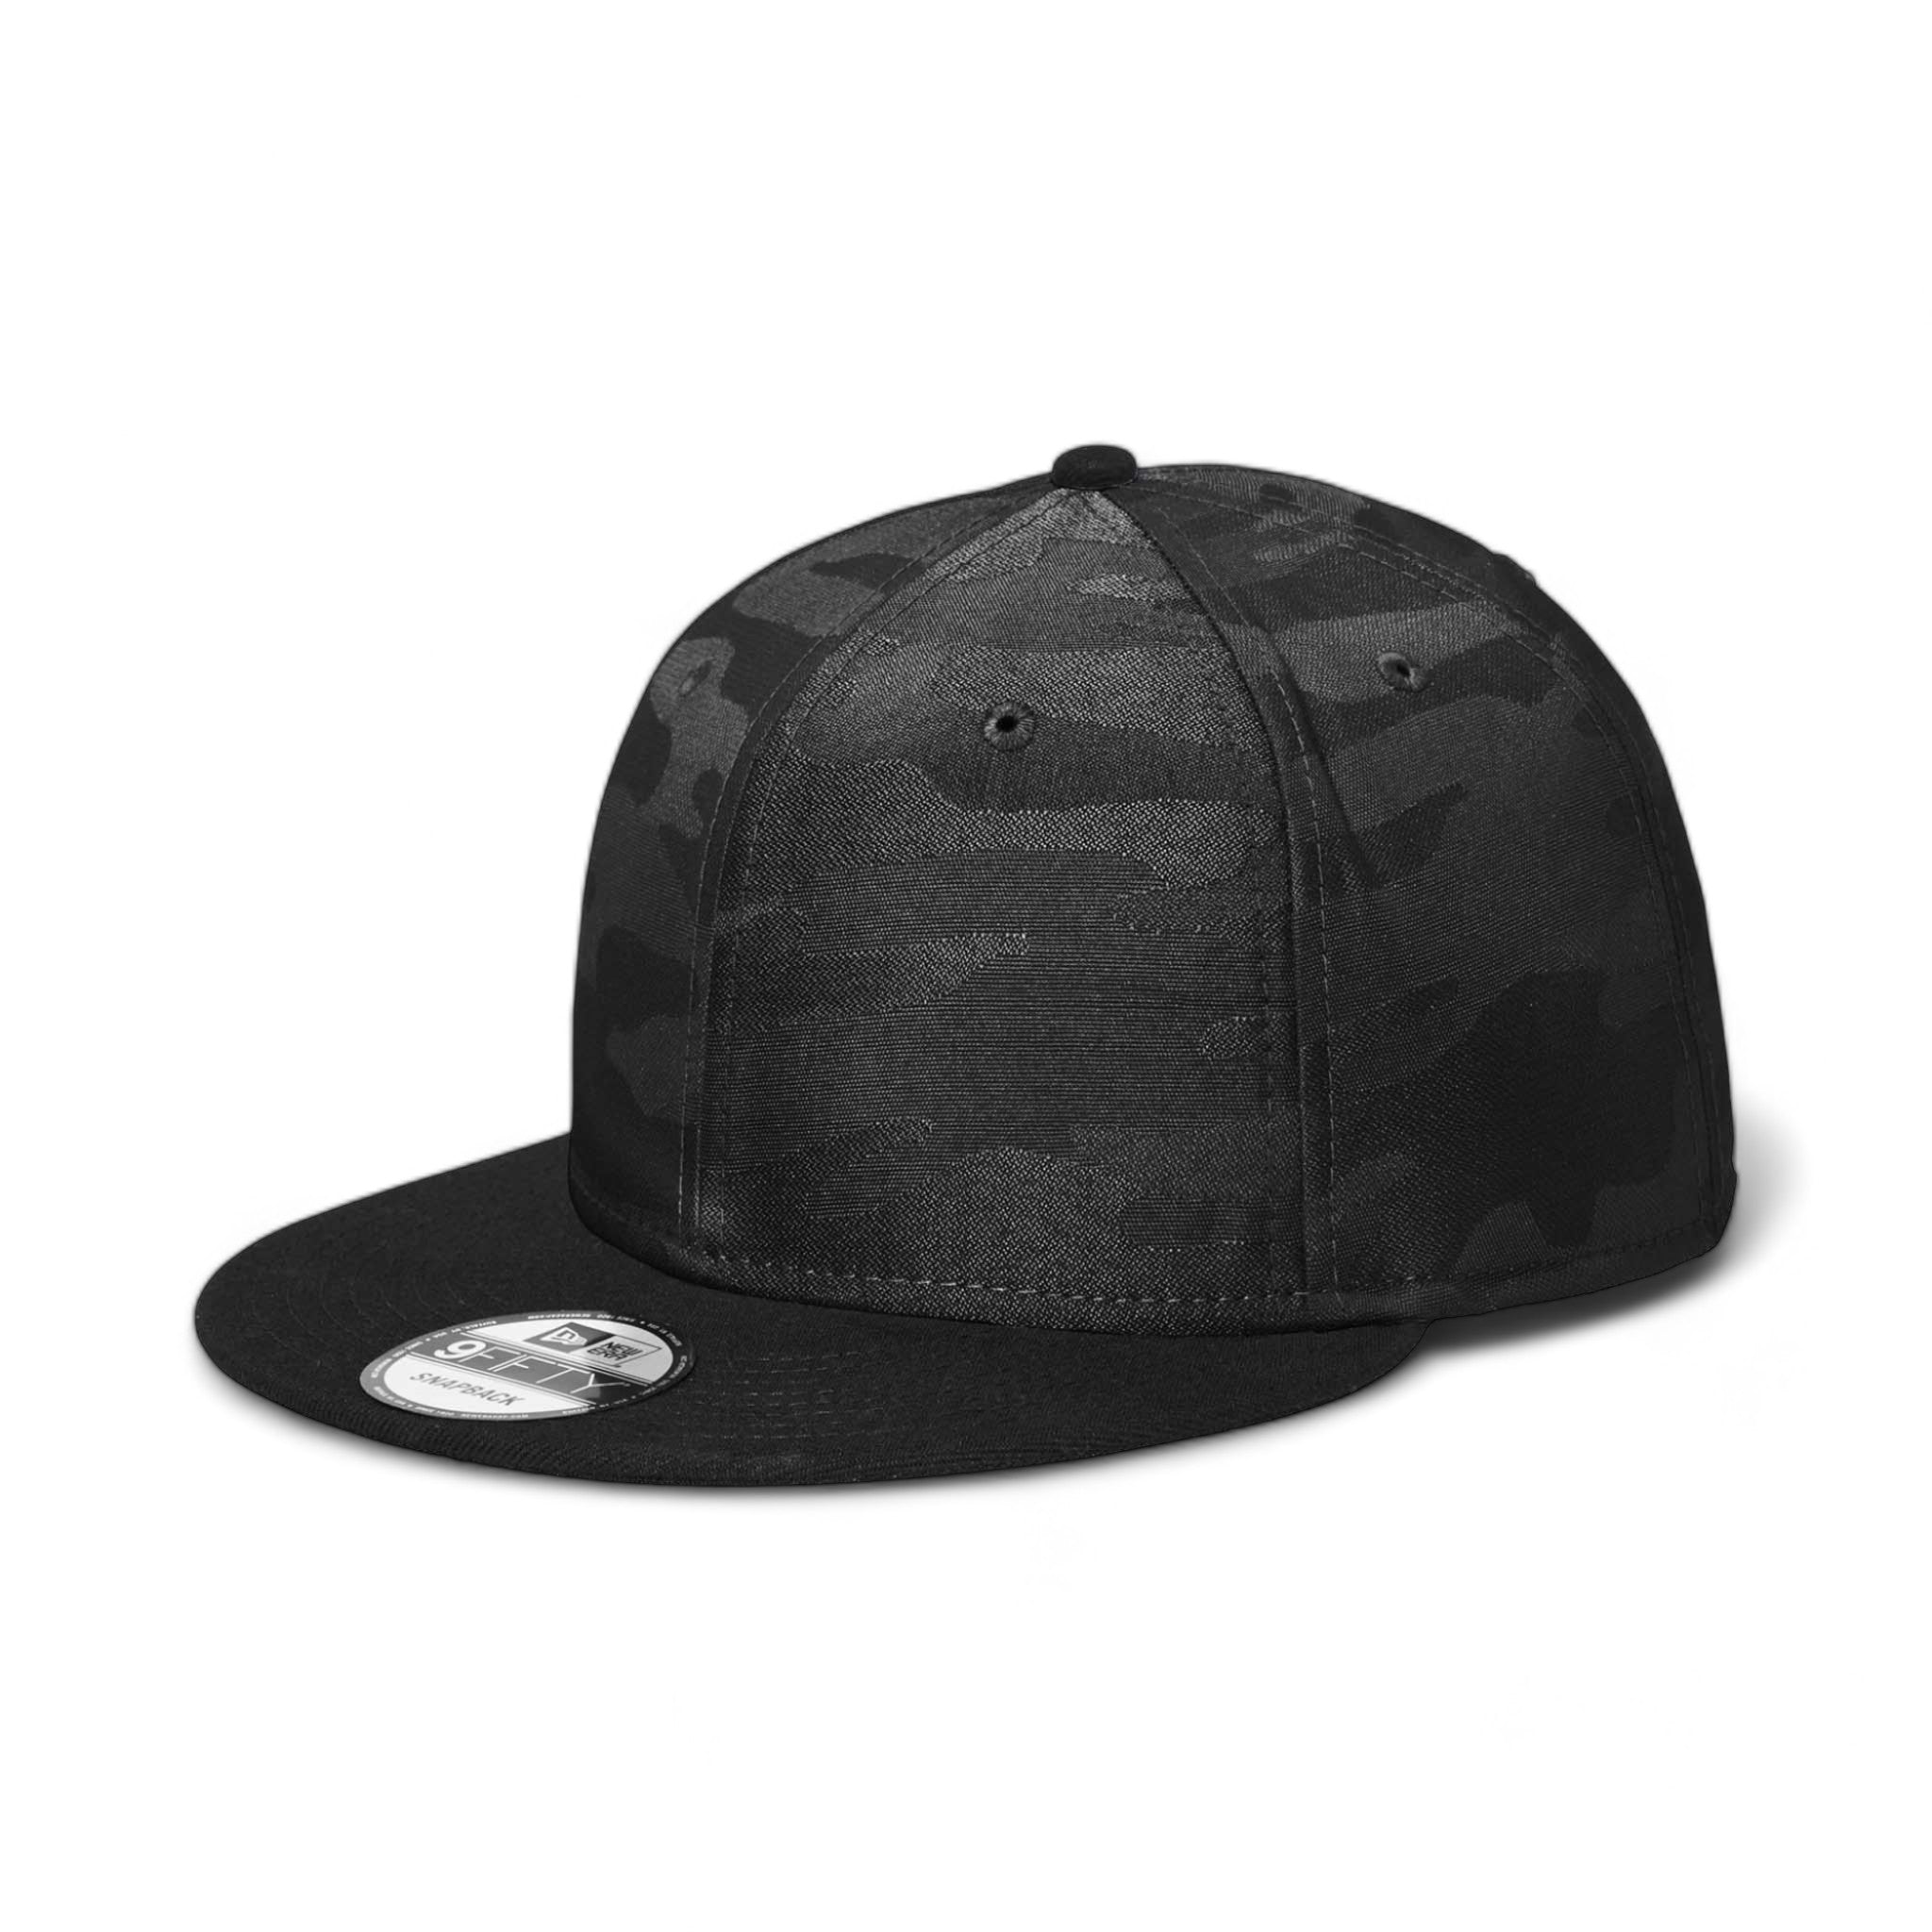 Side view of New Era NE407 custom hat in black and black camo